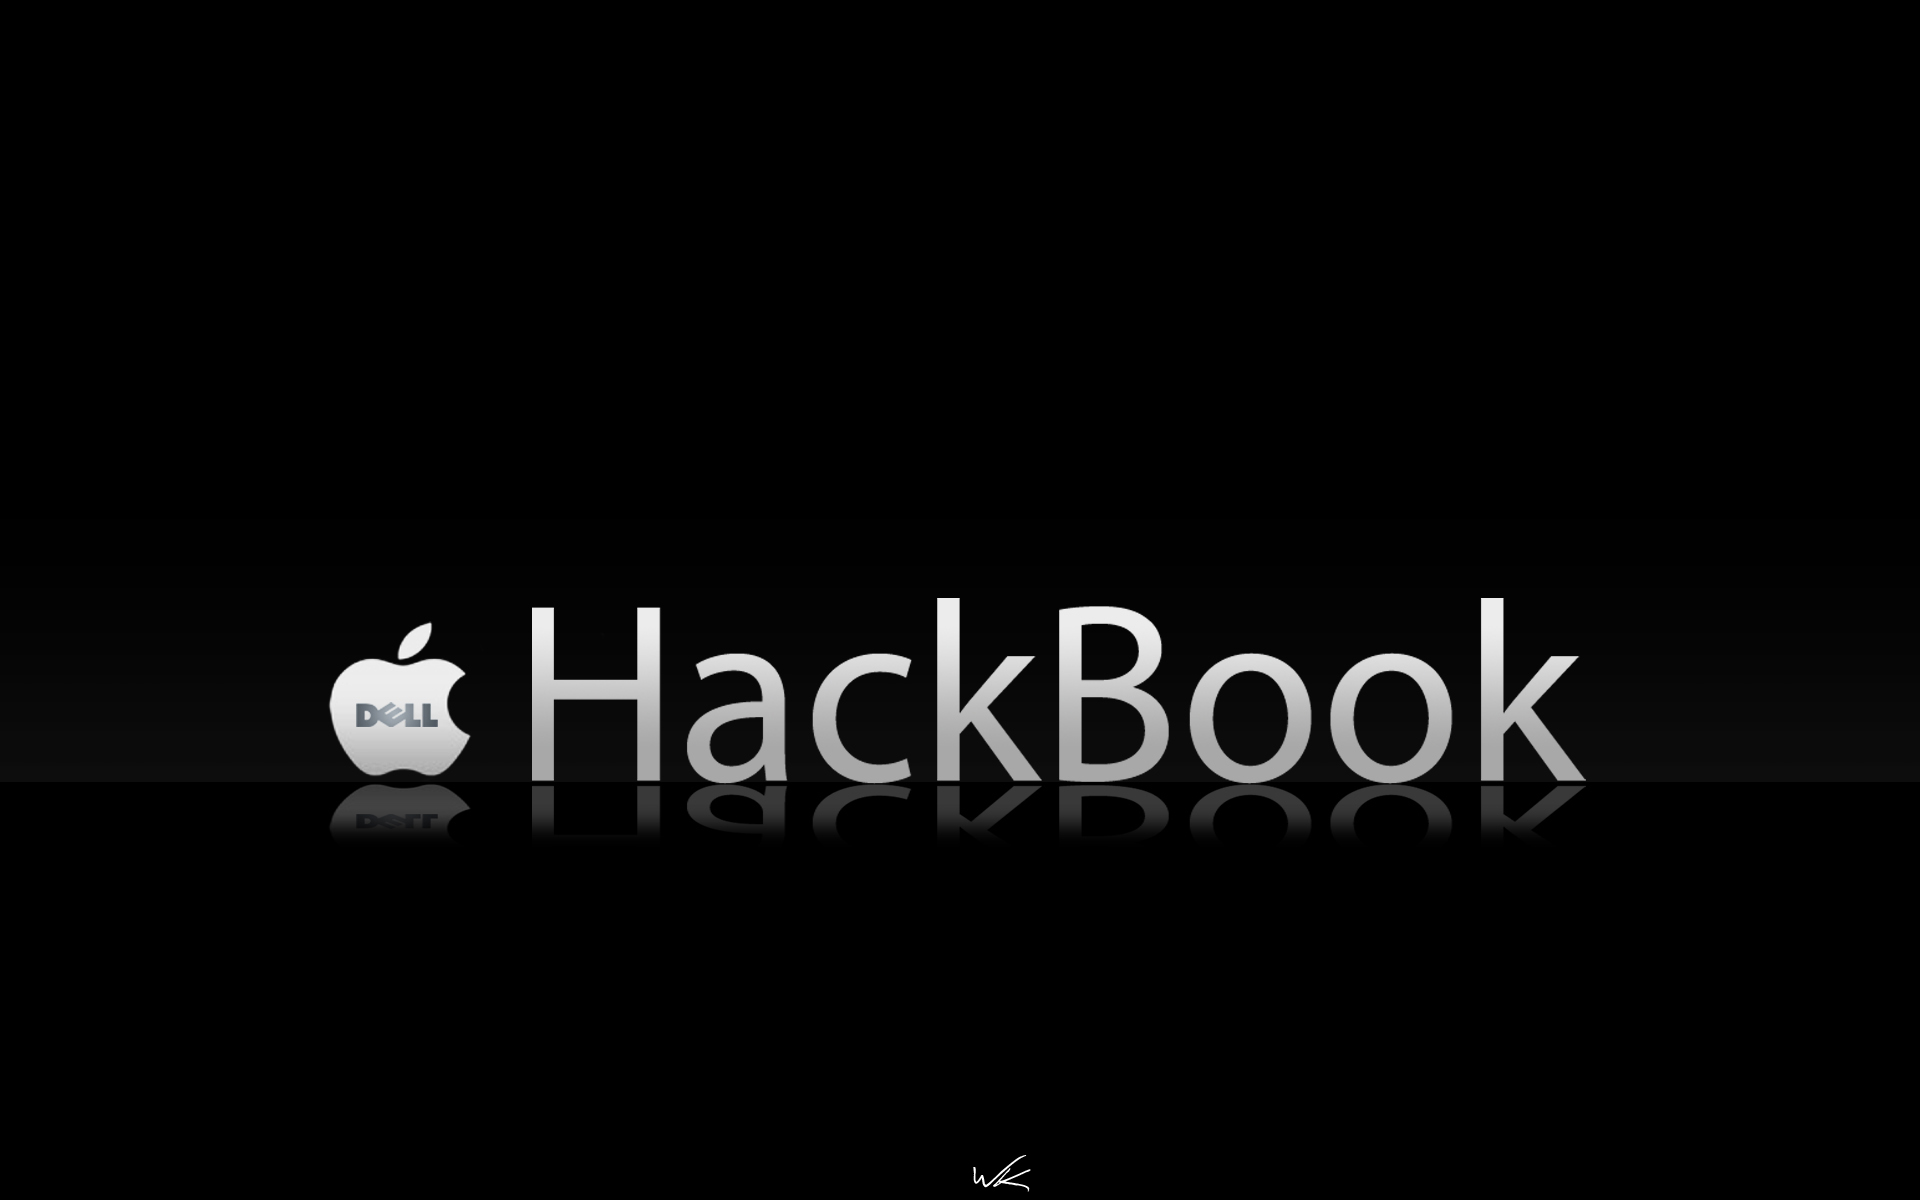 Dell Hackbook Desktop Pc And Mac Wallpaper